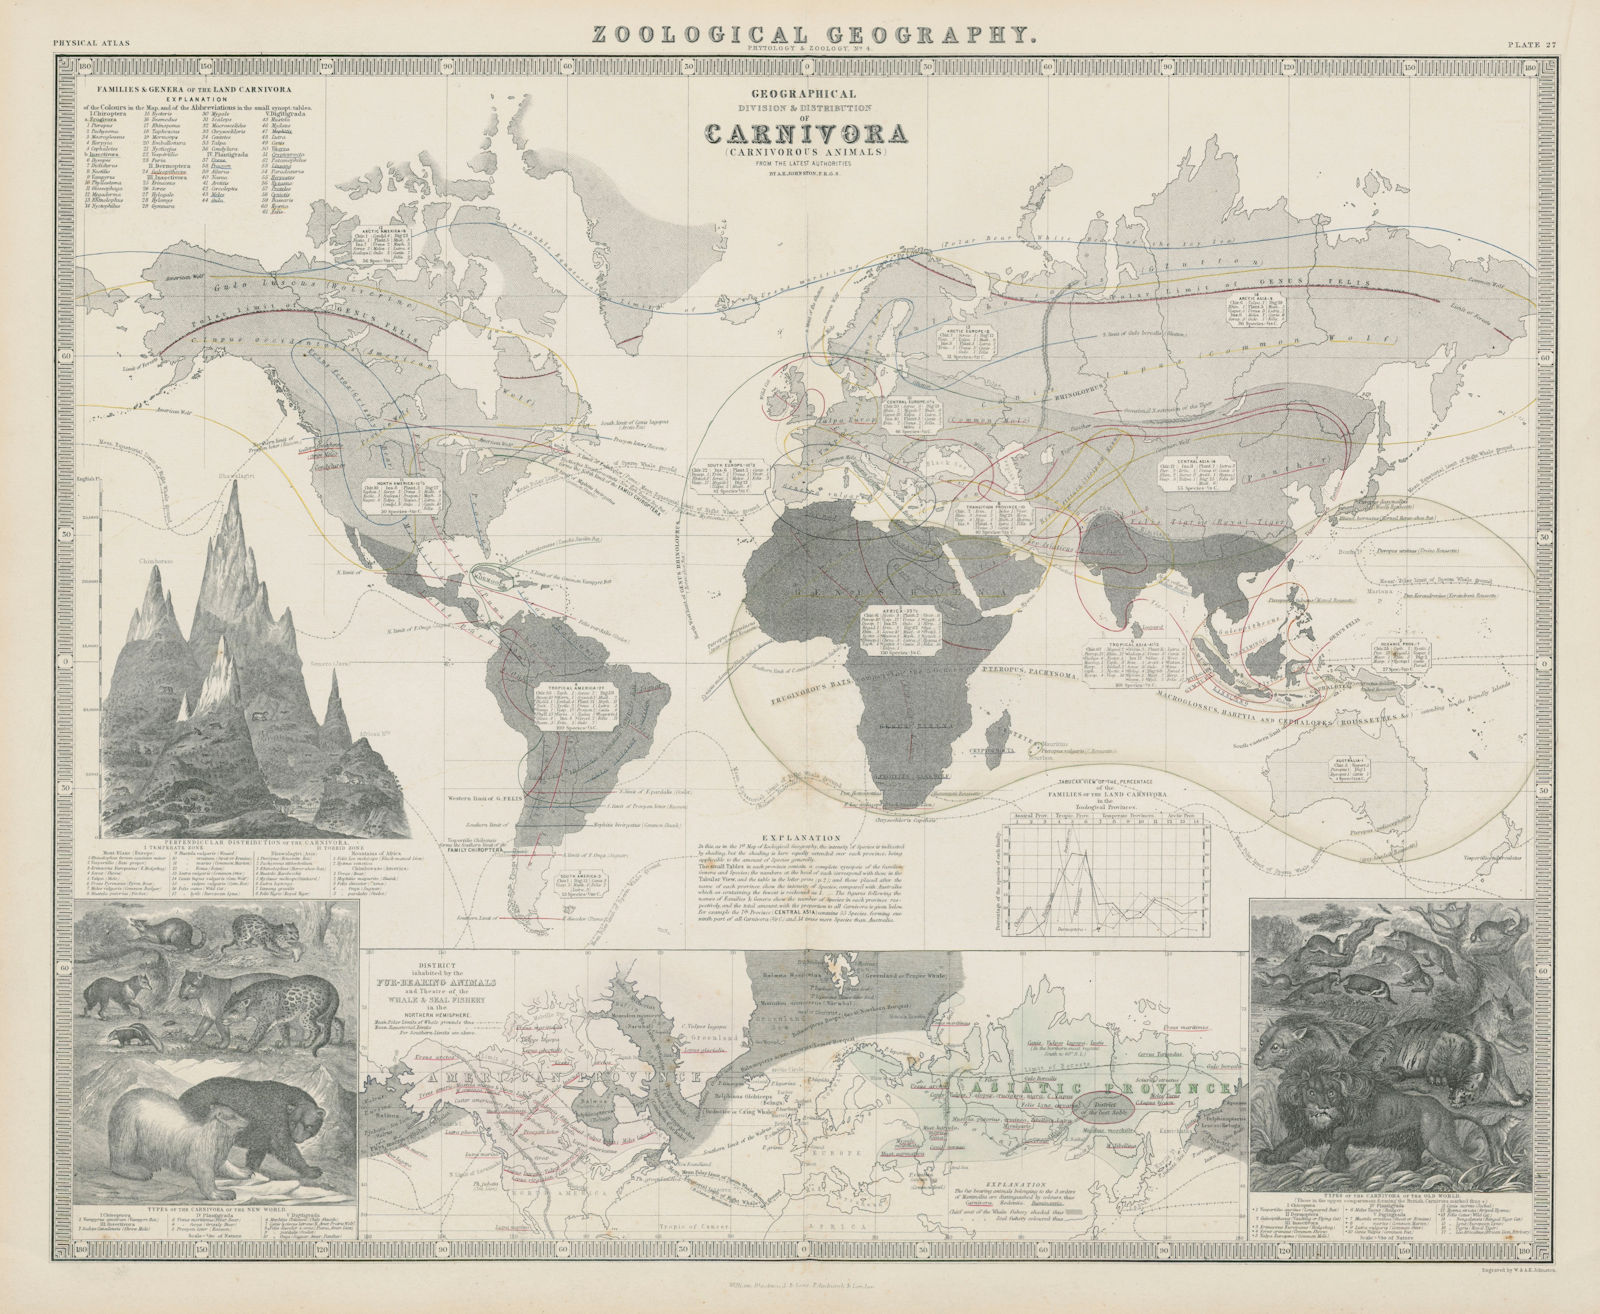 Zoological Geography. Carnivora (Carnivorous Animals) distribution 1856 map